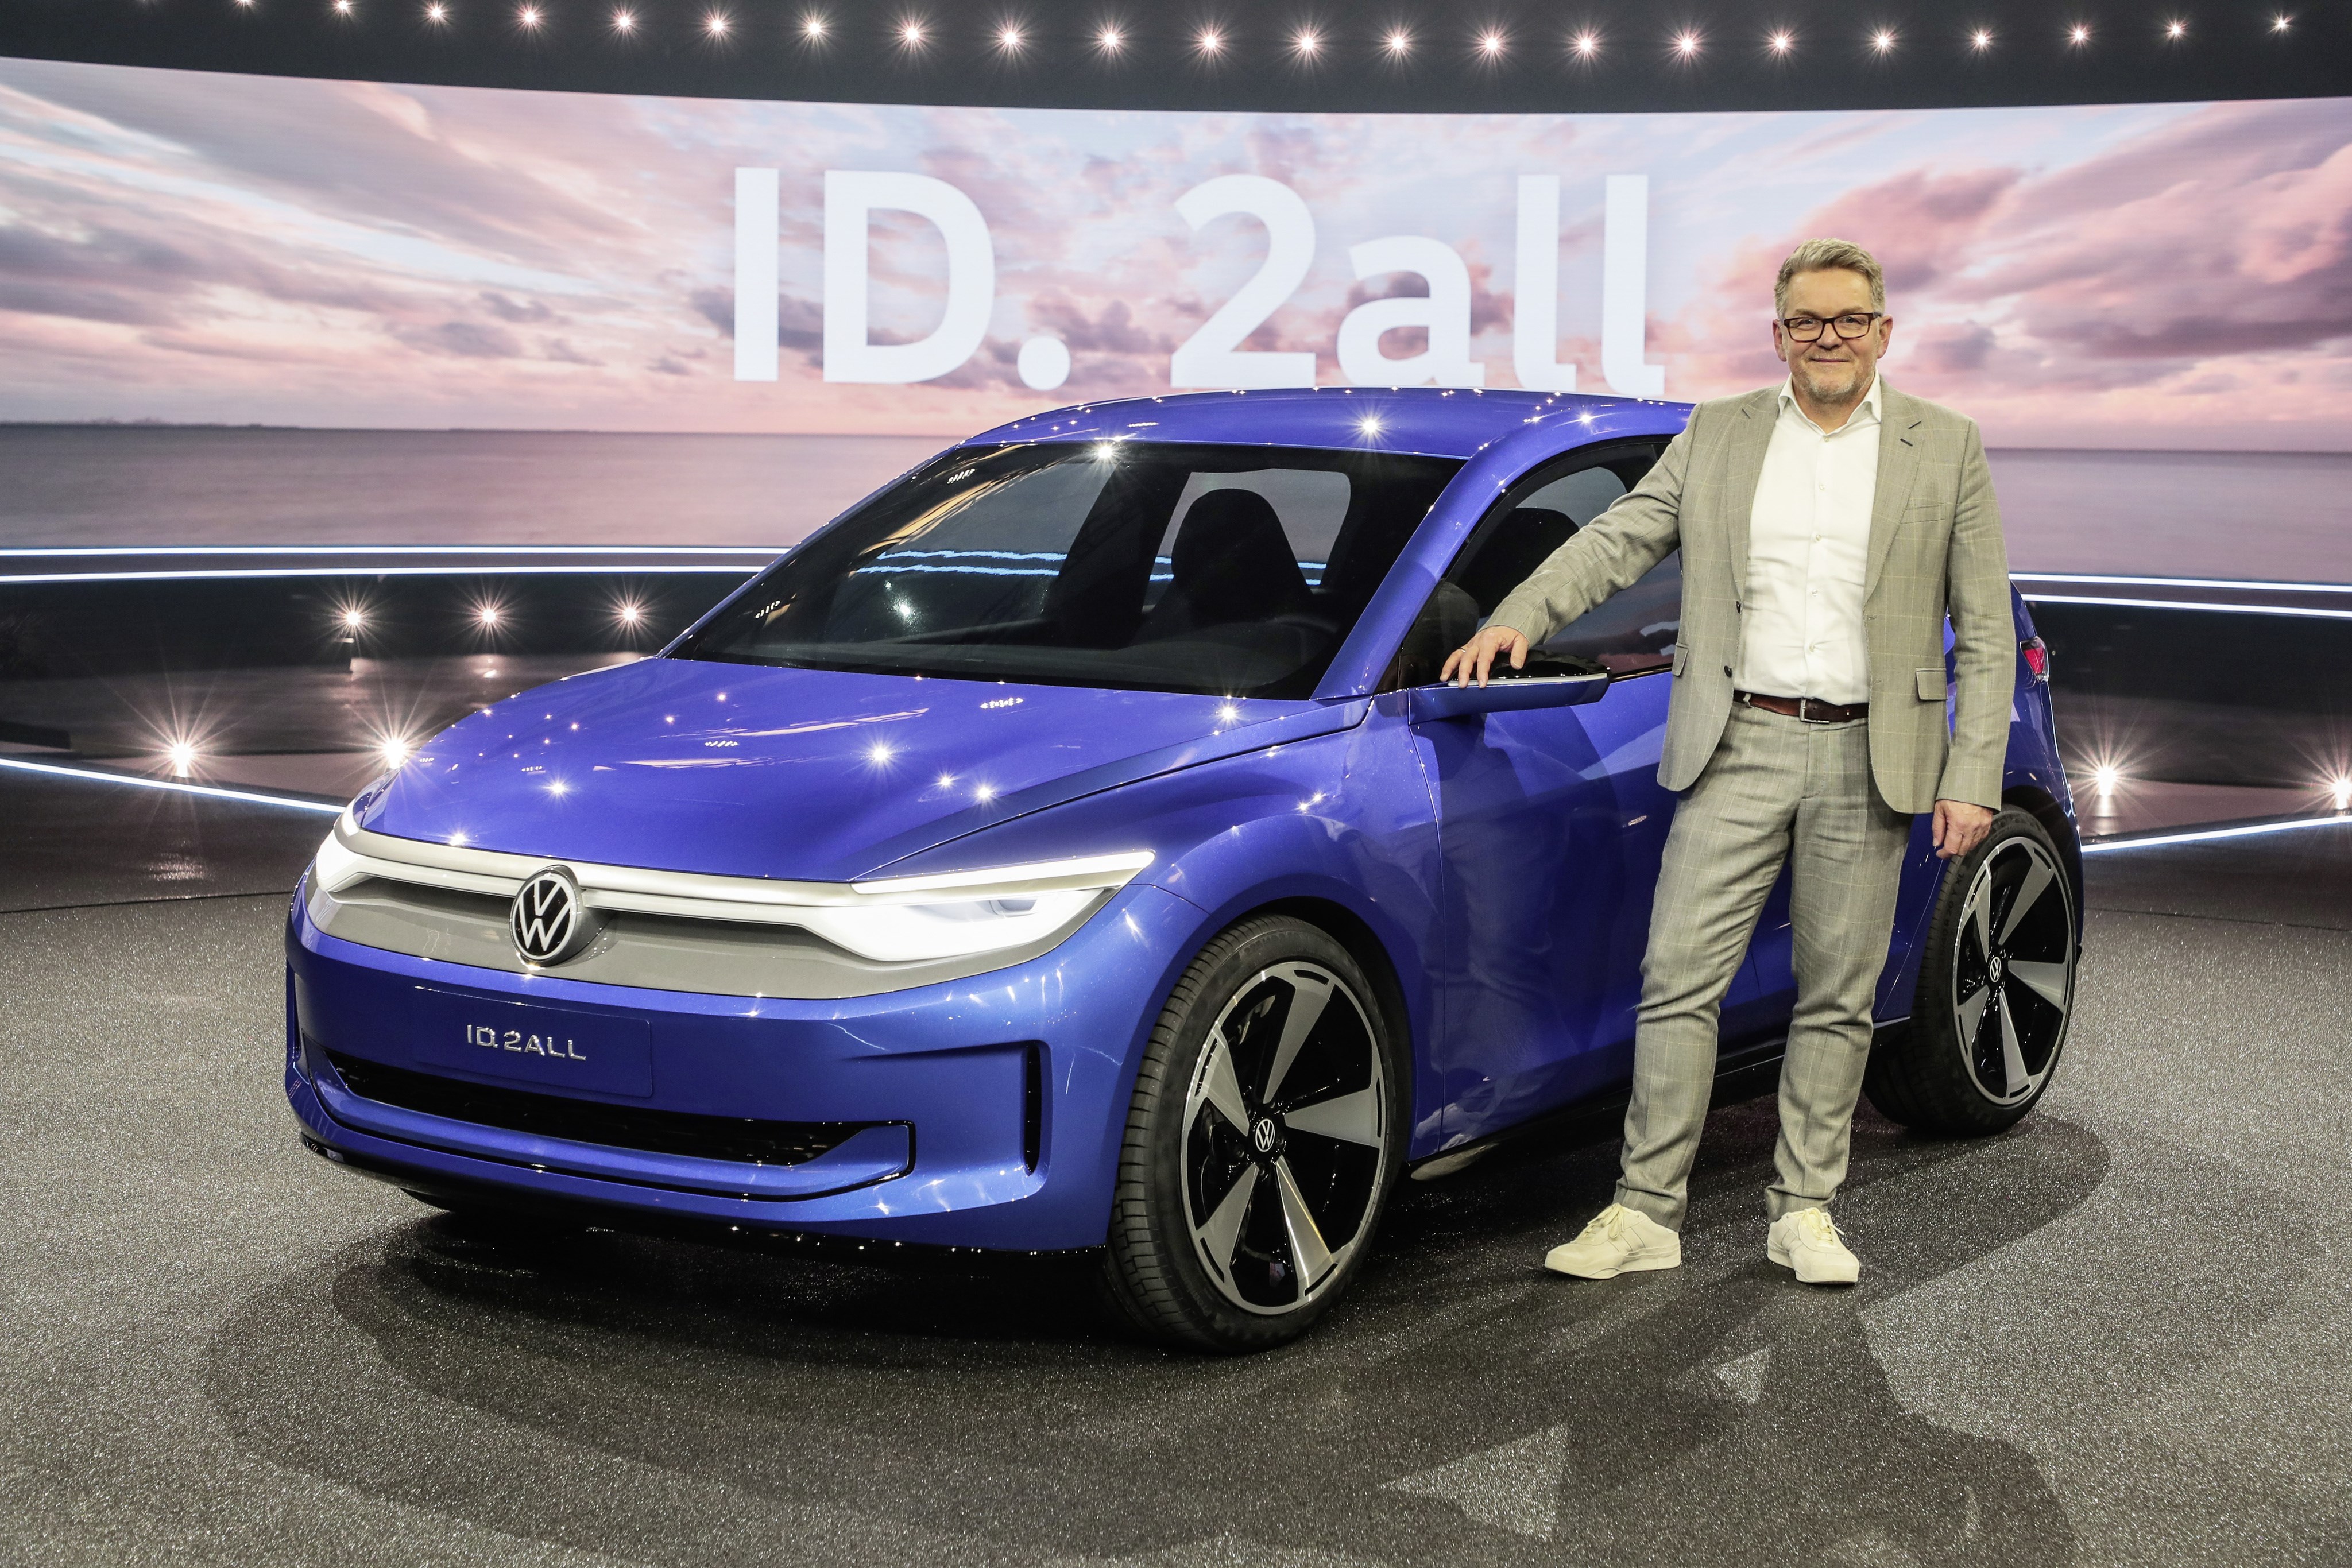 Volkswagen en ucuz elektrikli otomobilini tanıttı: İşte ID. 2all